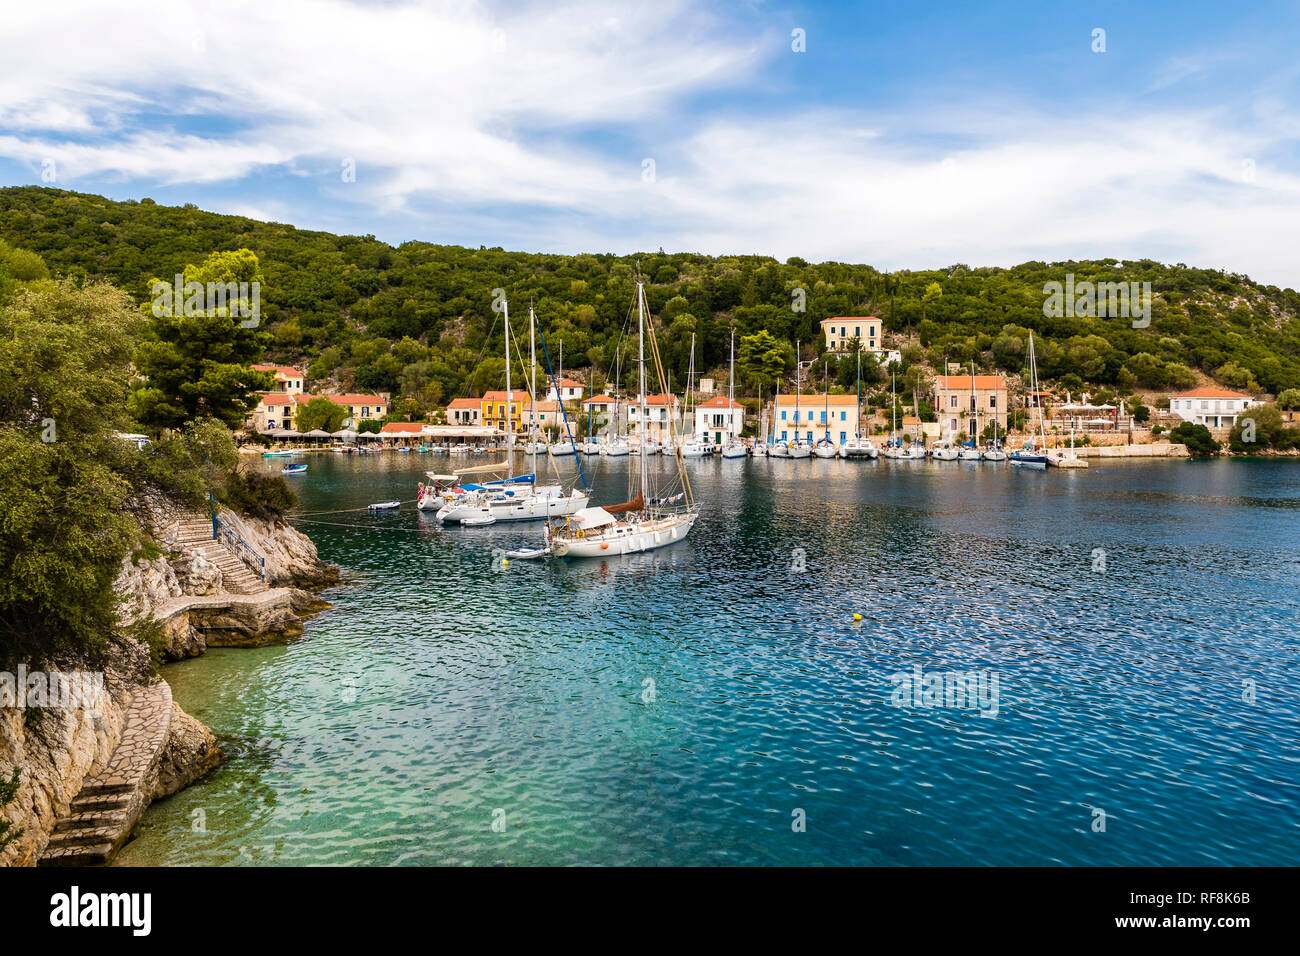 La Grecia, guardare a Itaca, mare Ionico, porto, Kioni, , Griechenland, Blick auf Itaca, Ionisches Meer, Hafen Foto Stock